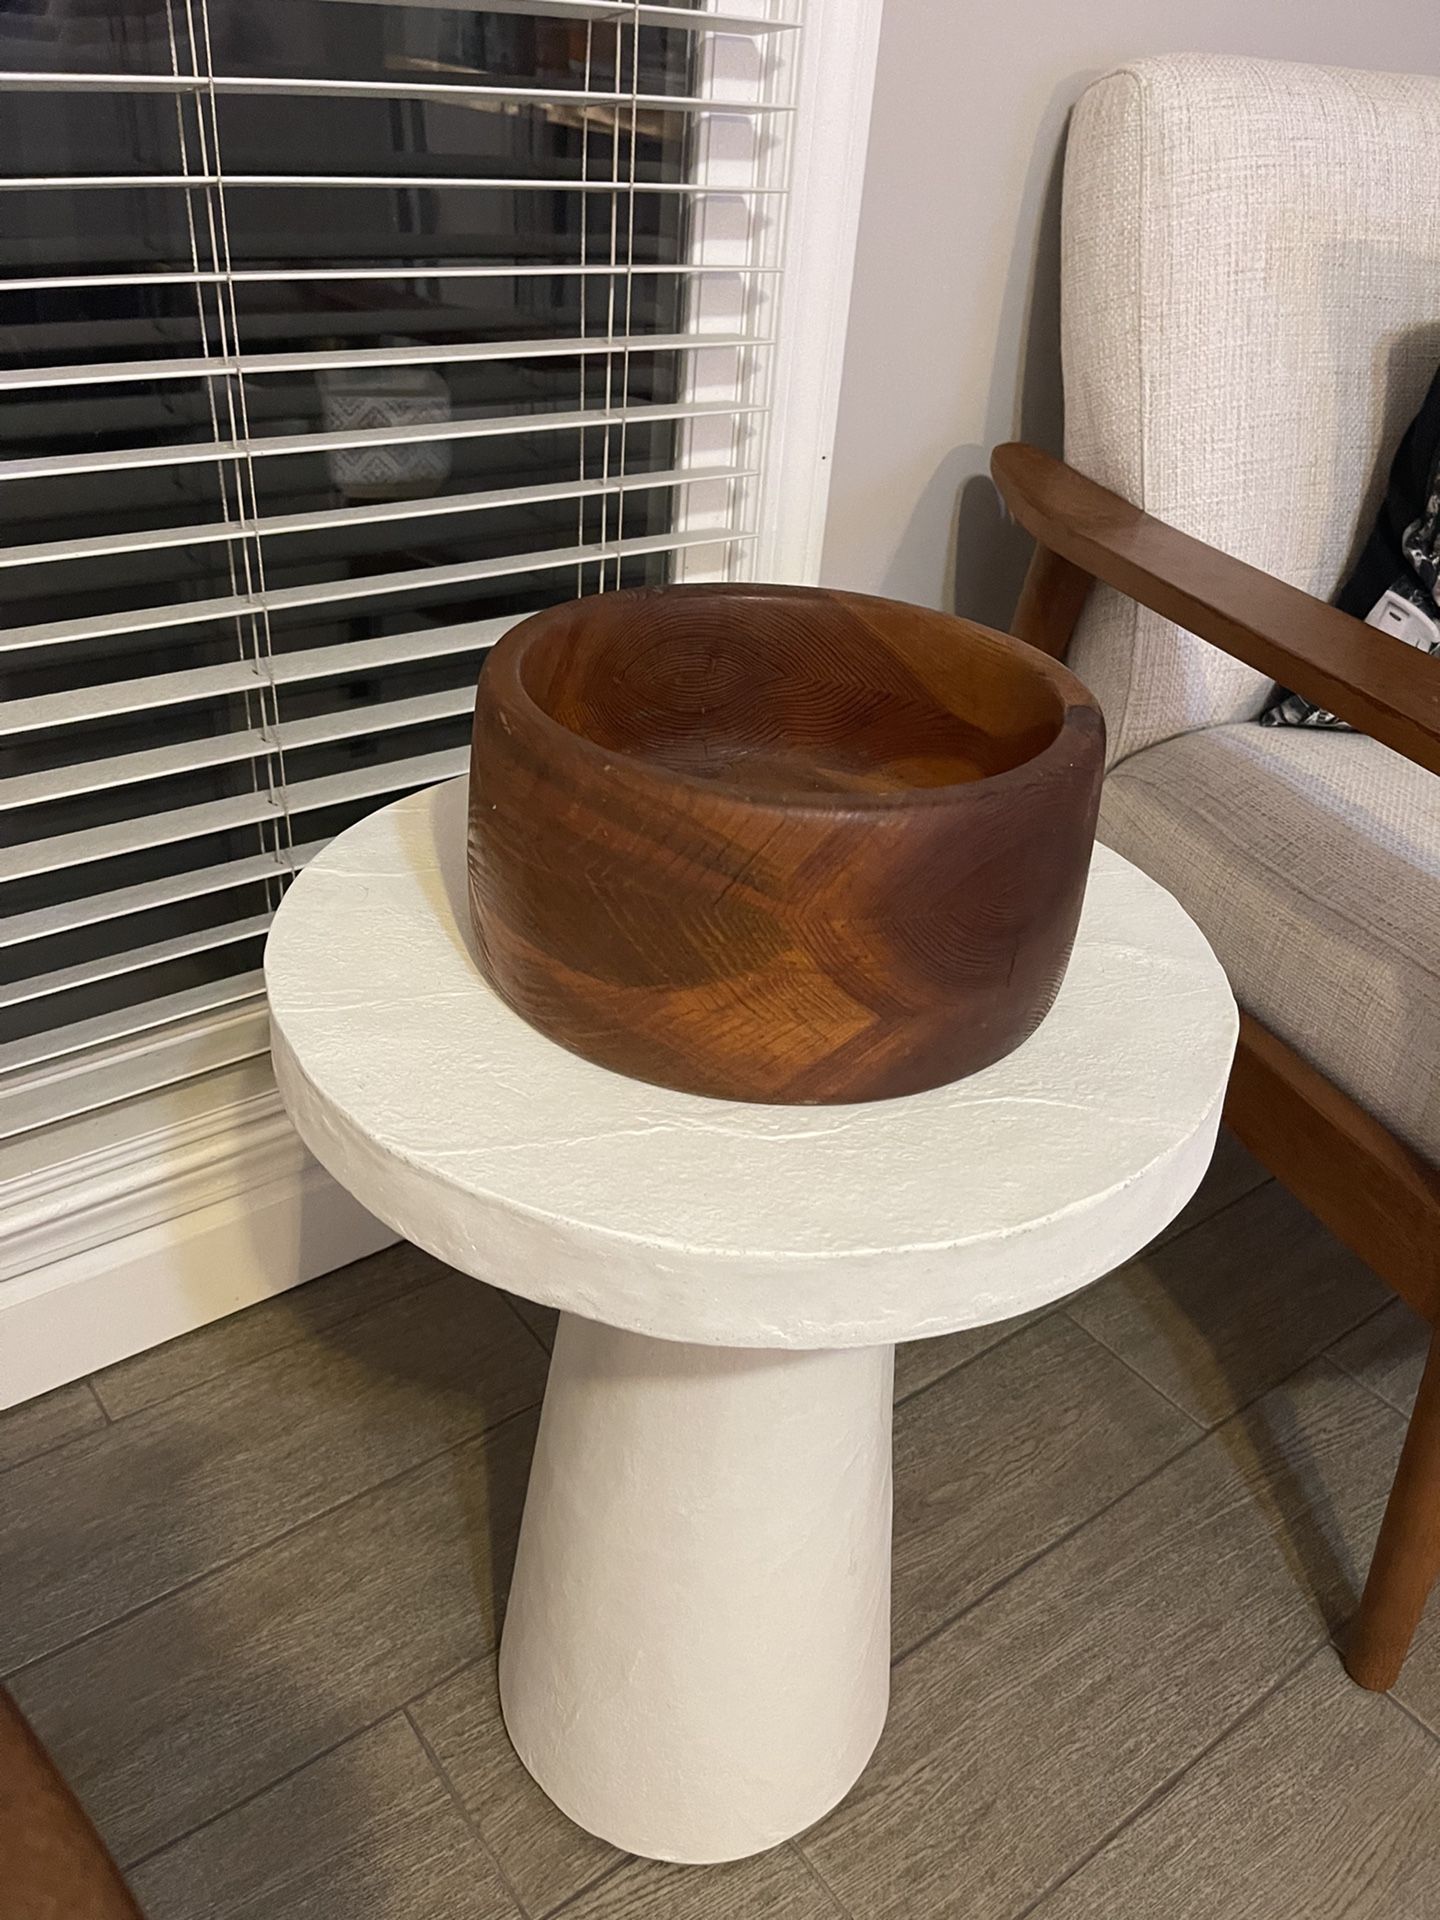 Wooden Bowl Centerpiece 